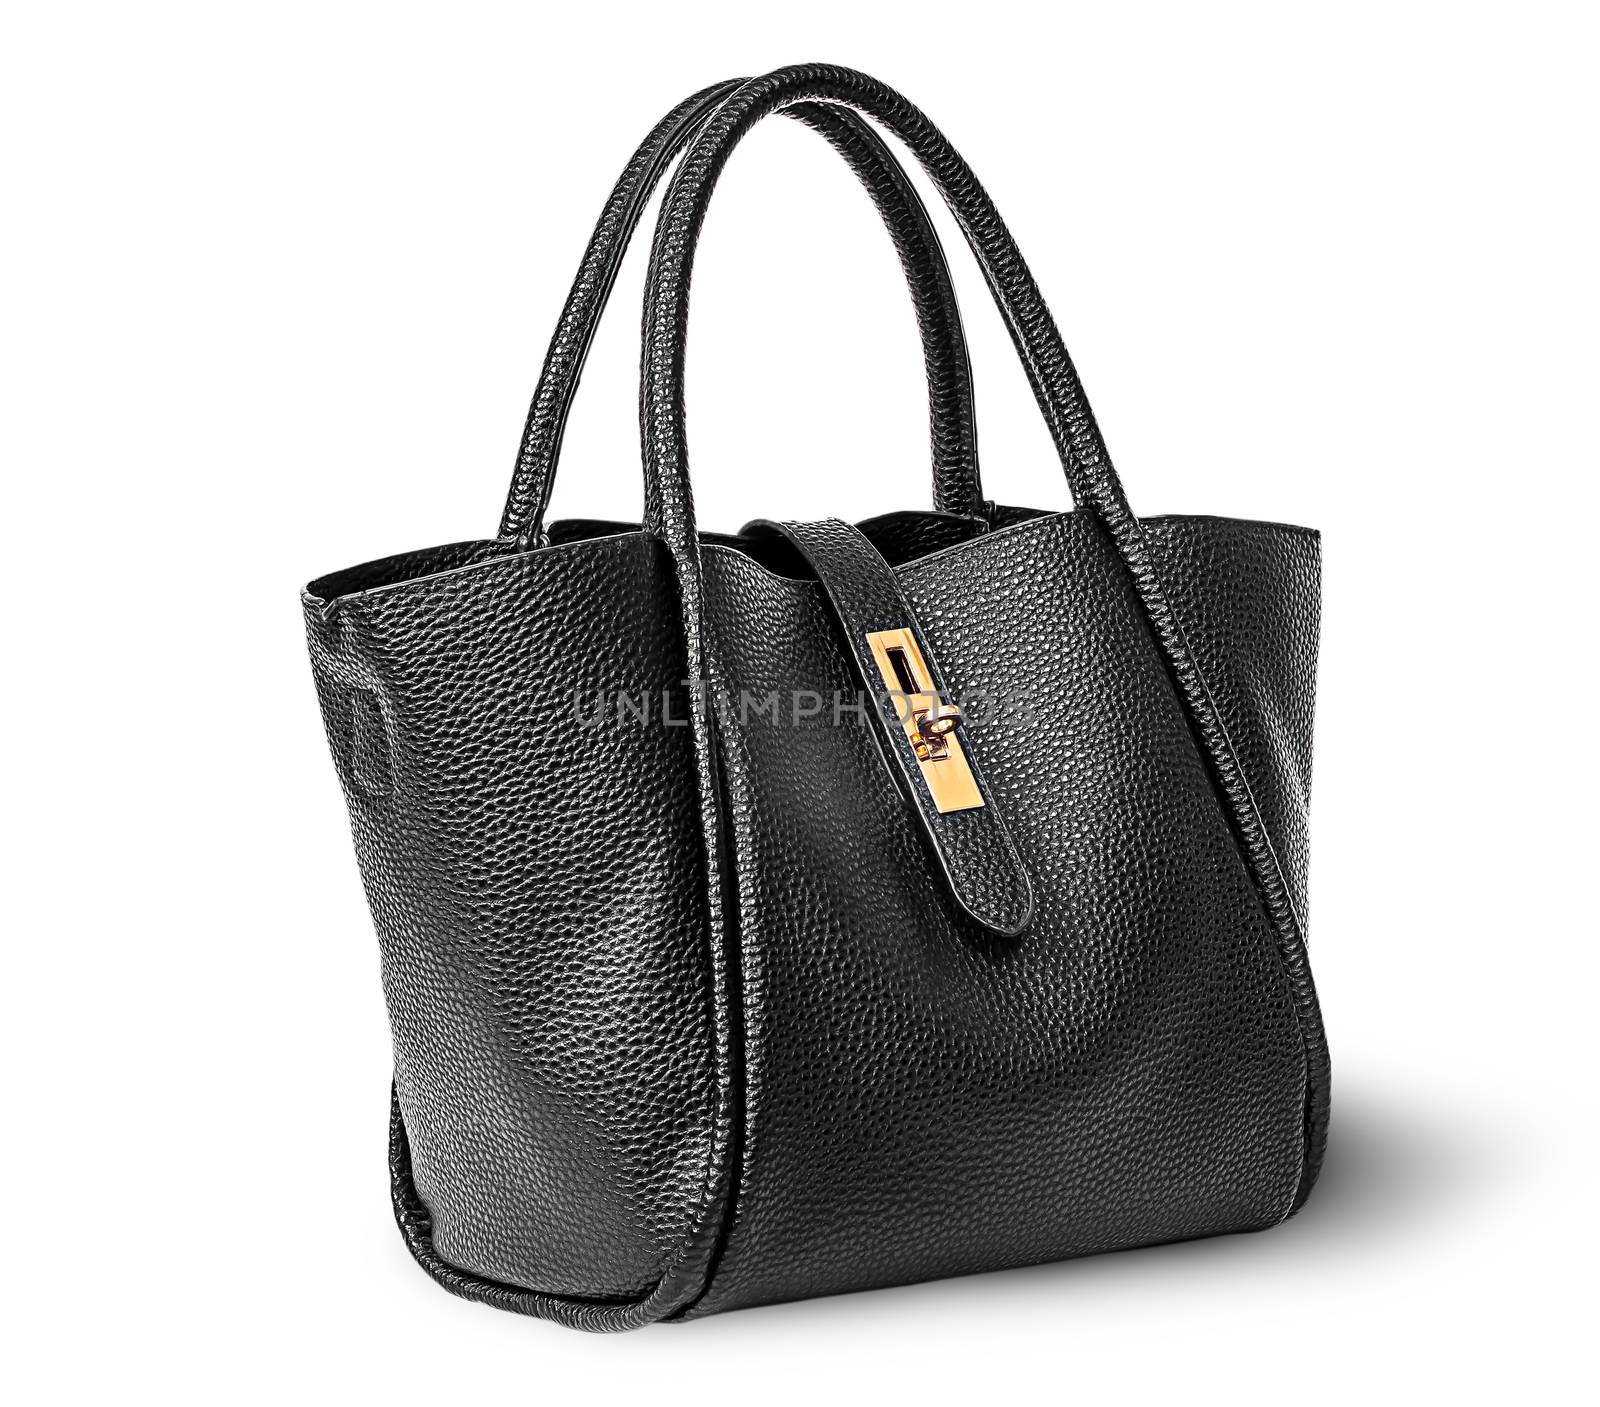 Black elegant leather ladies handbag rotated by Cipariss